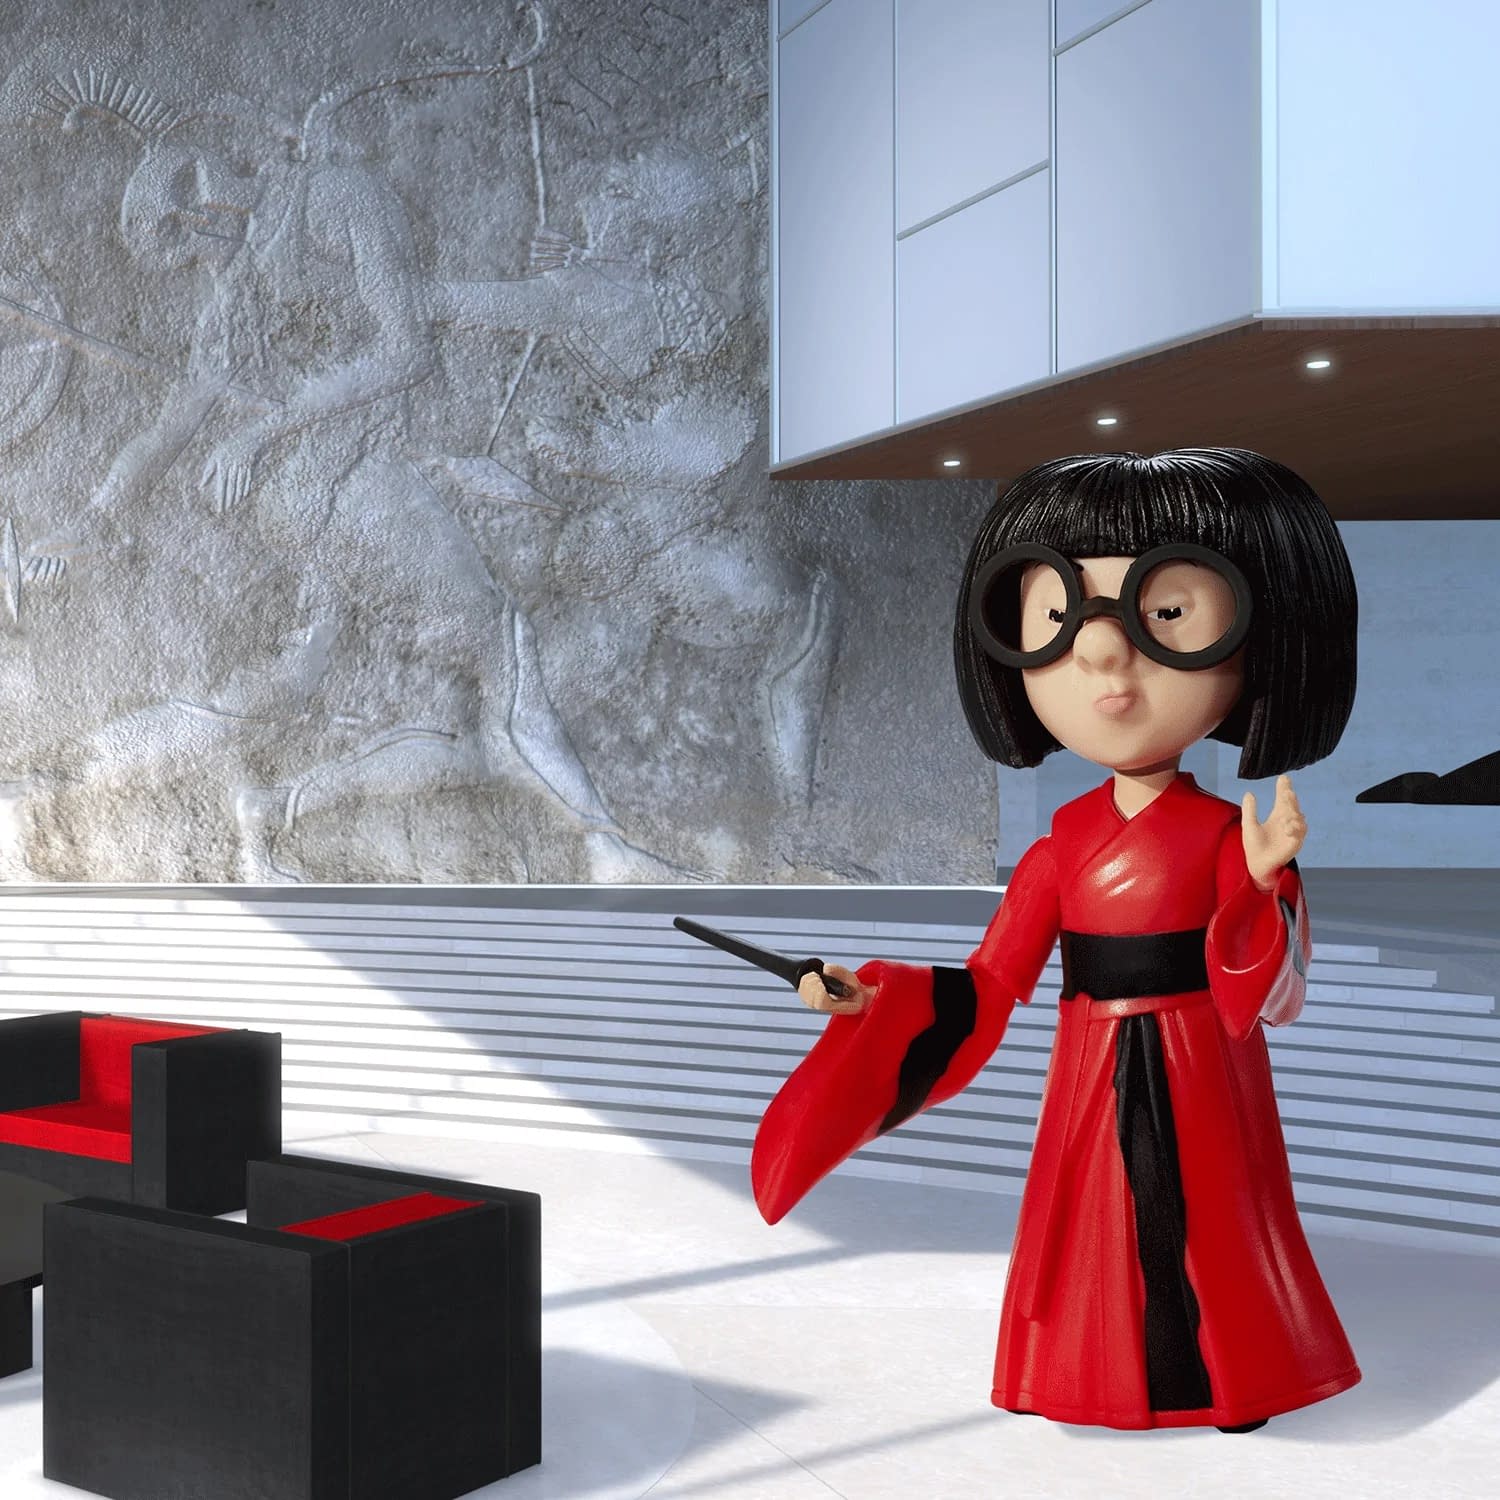 Mattel Debuts SDCC Exclusive Pixar Spotlight Series: Edna Mode